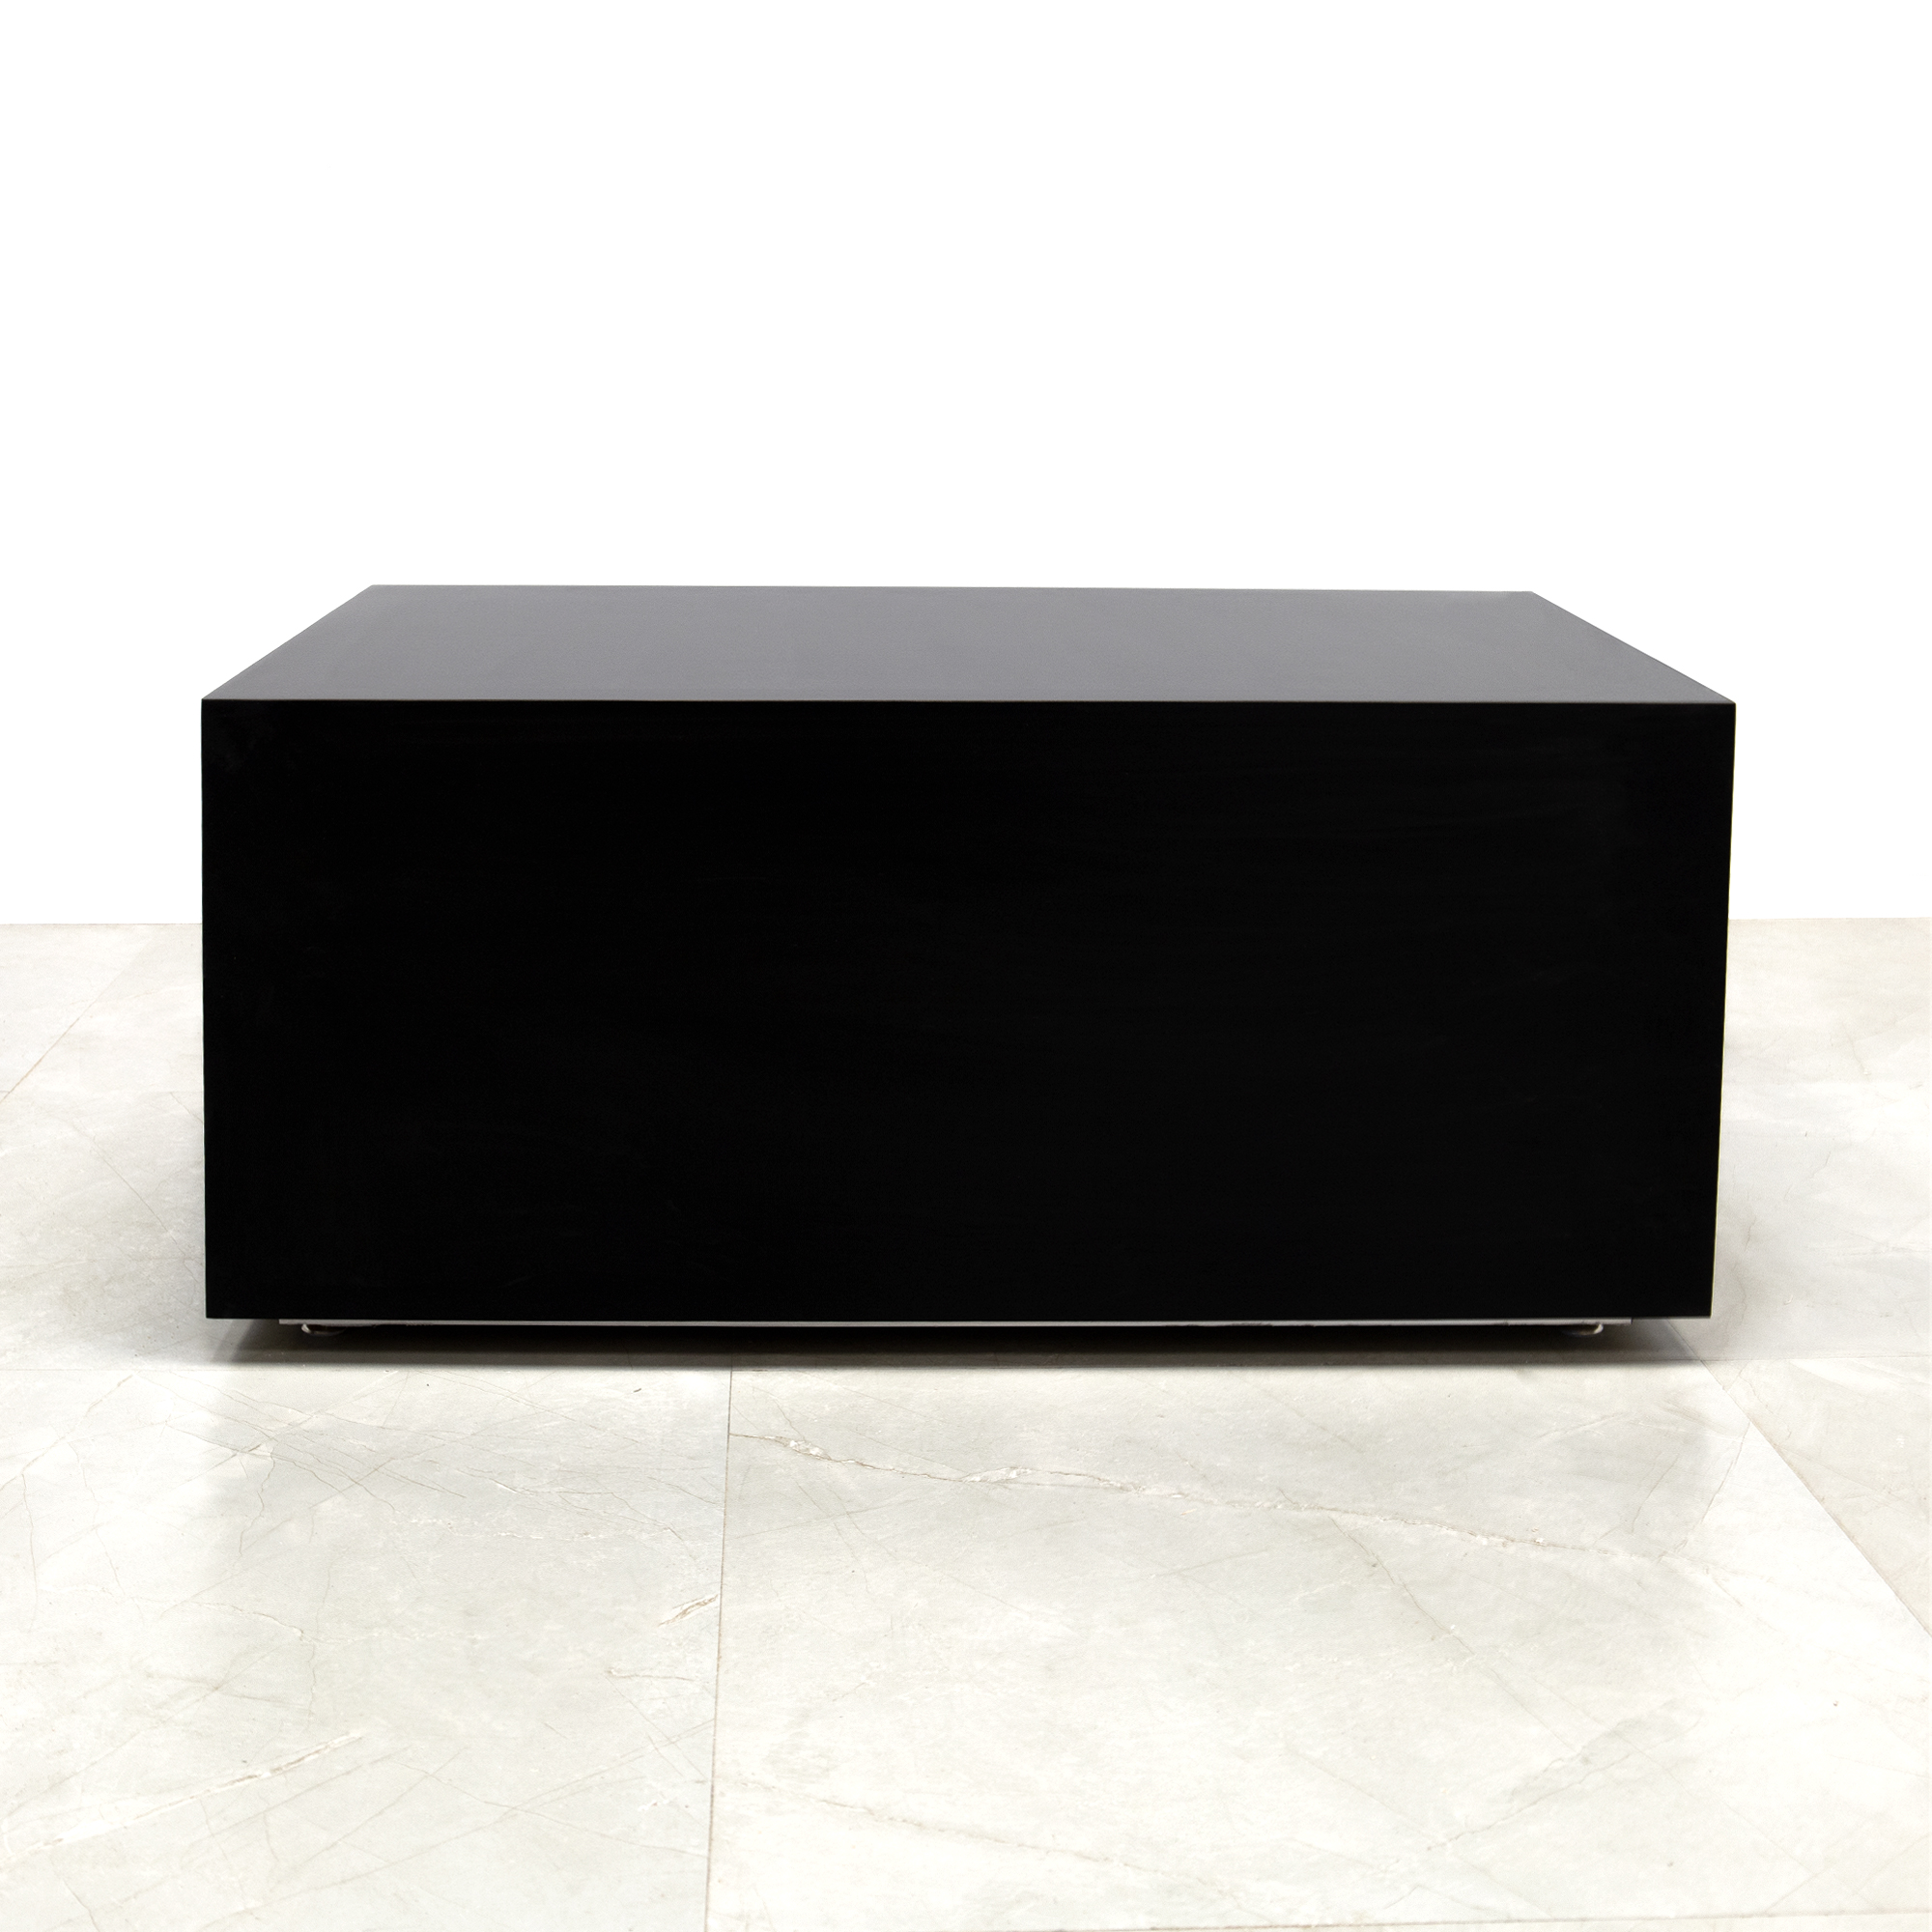 Norfolk Rectangular Lobby Table in black traceless laminate finish shown here.